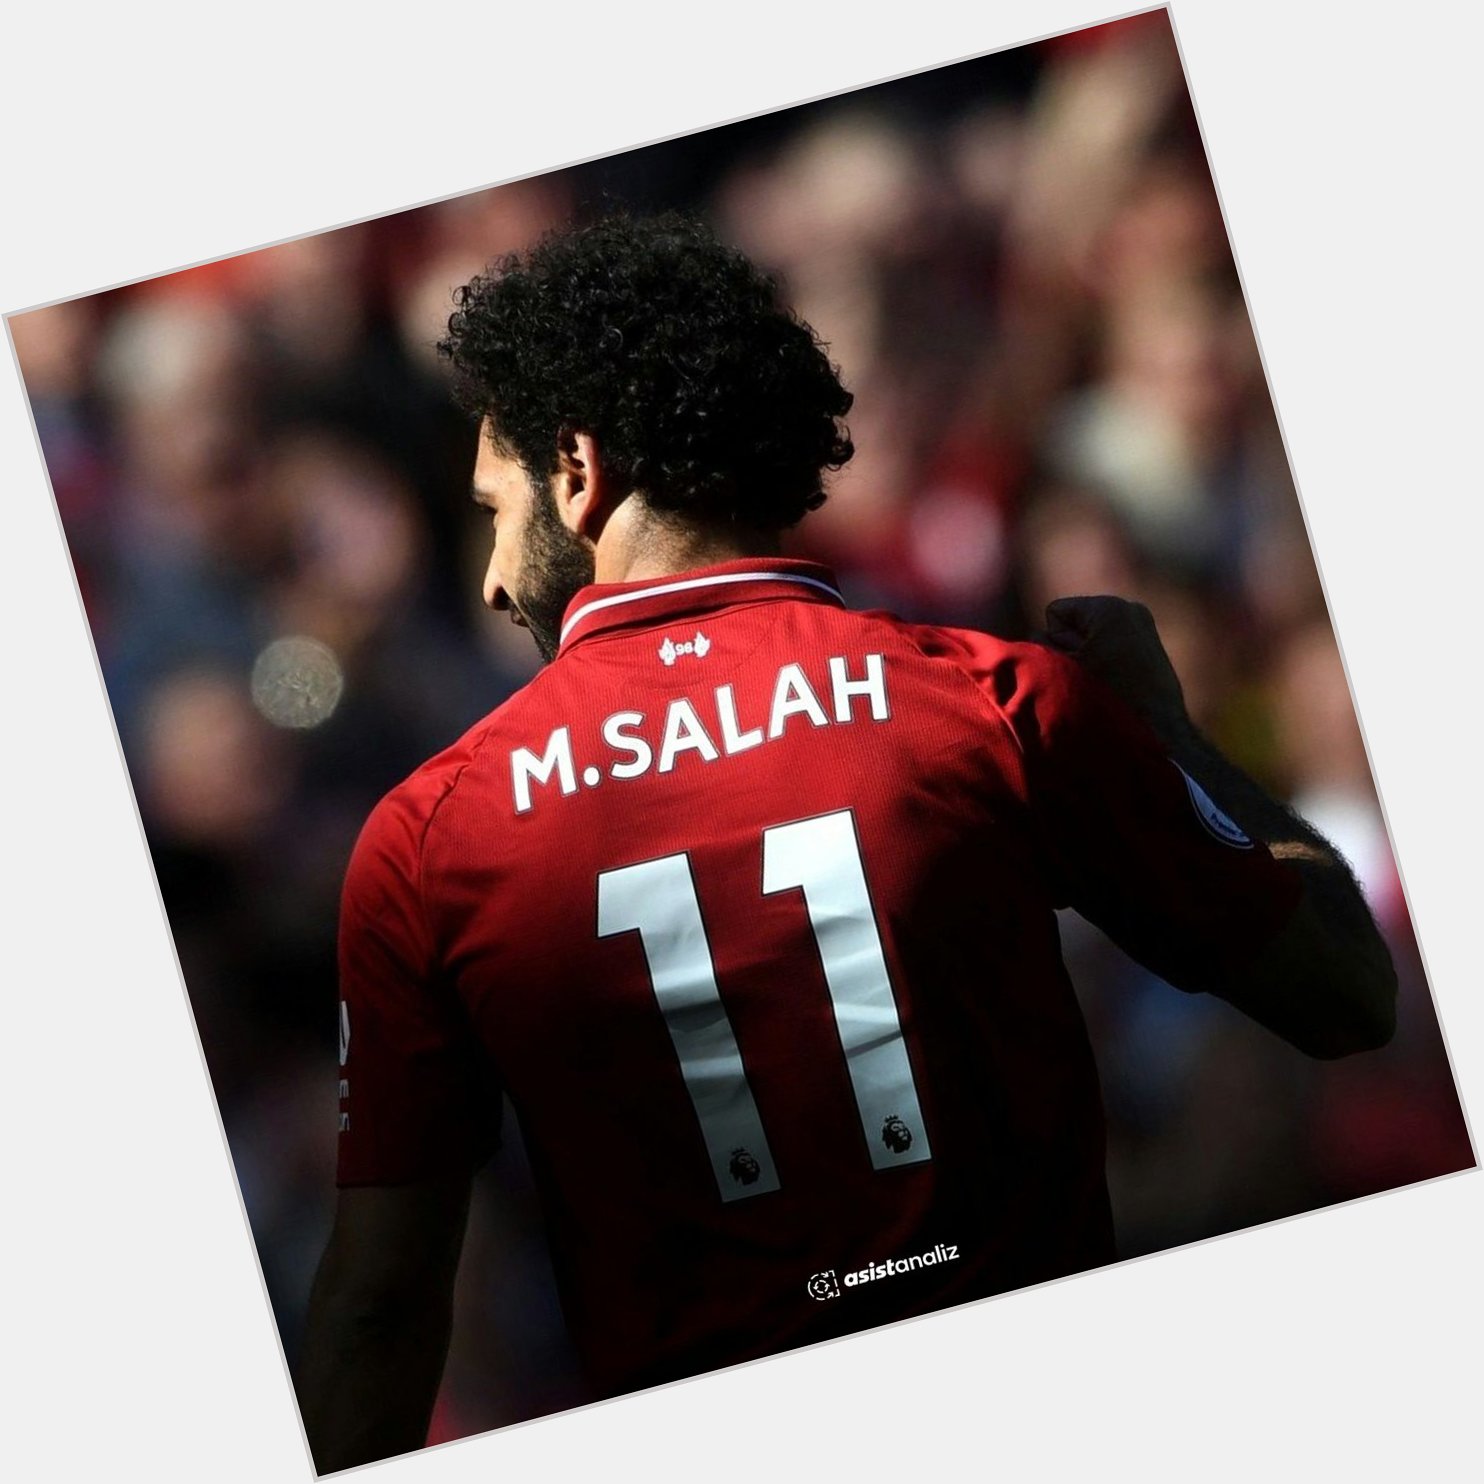 Liverpool\un süperstar Mohamed Salah, 28 ya  nda!

Happy Birthday, 